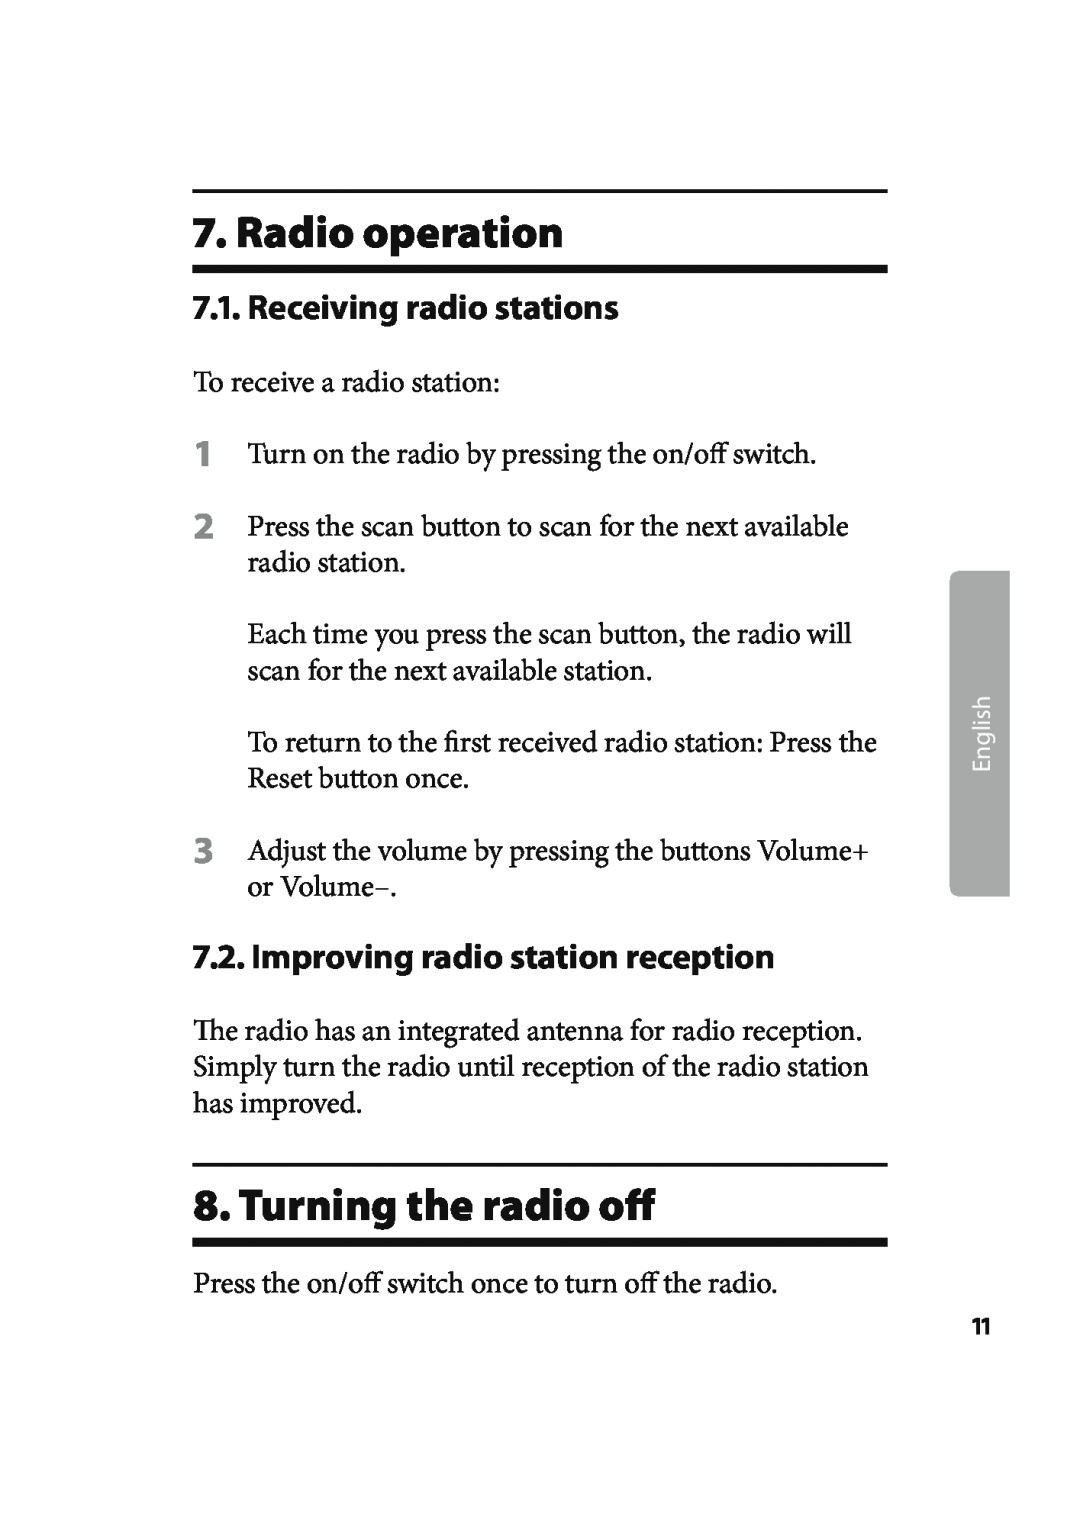 Kompernass KH 2244 Radio operation, Turning the radio oﬀ, Receiving radio stations, Improving radio station reception 